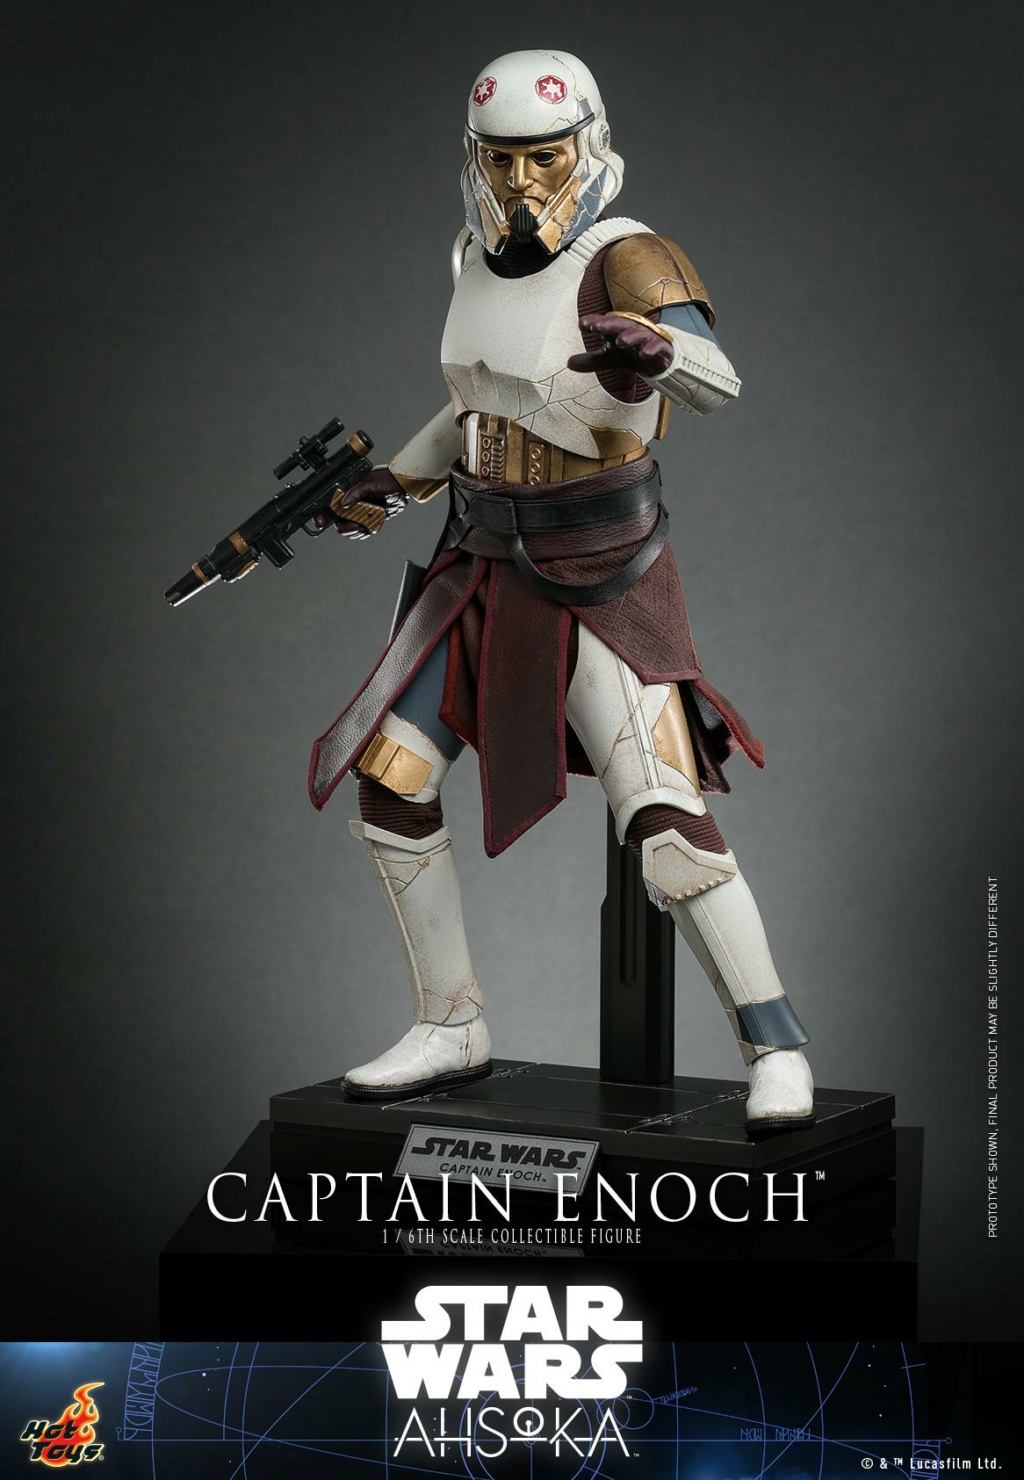 Star Wars: Ahsoka - 1/6th scale Captain Enoch Collectible Figure - Hot Toys Captai97